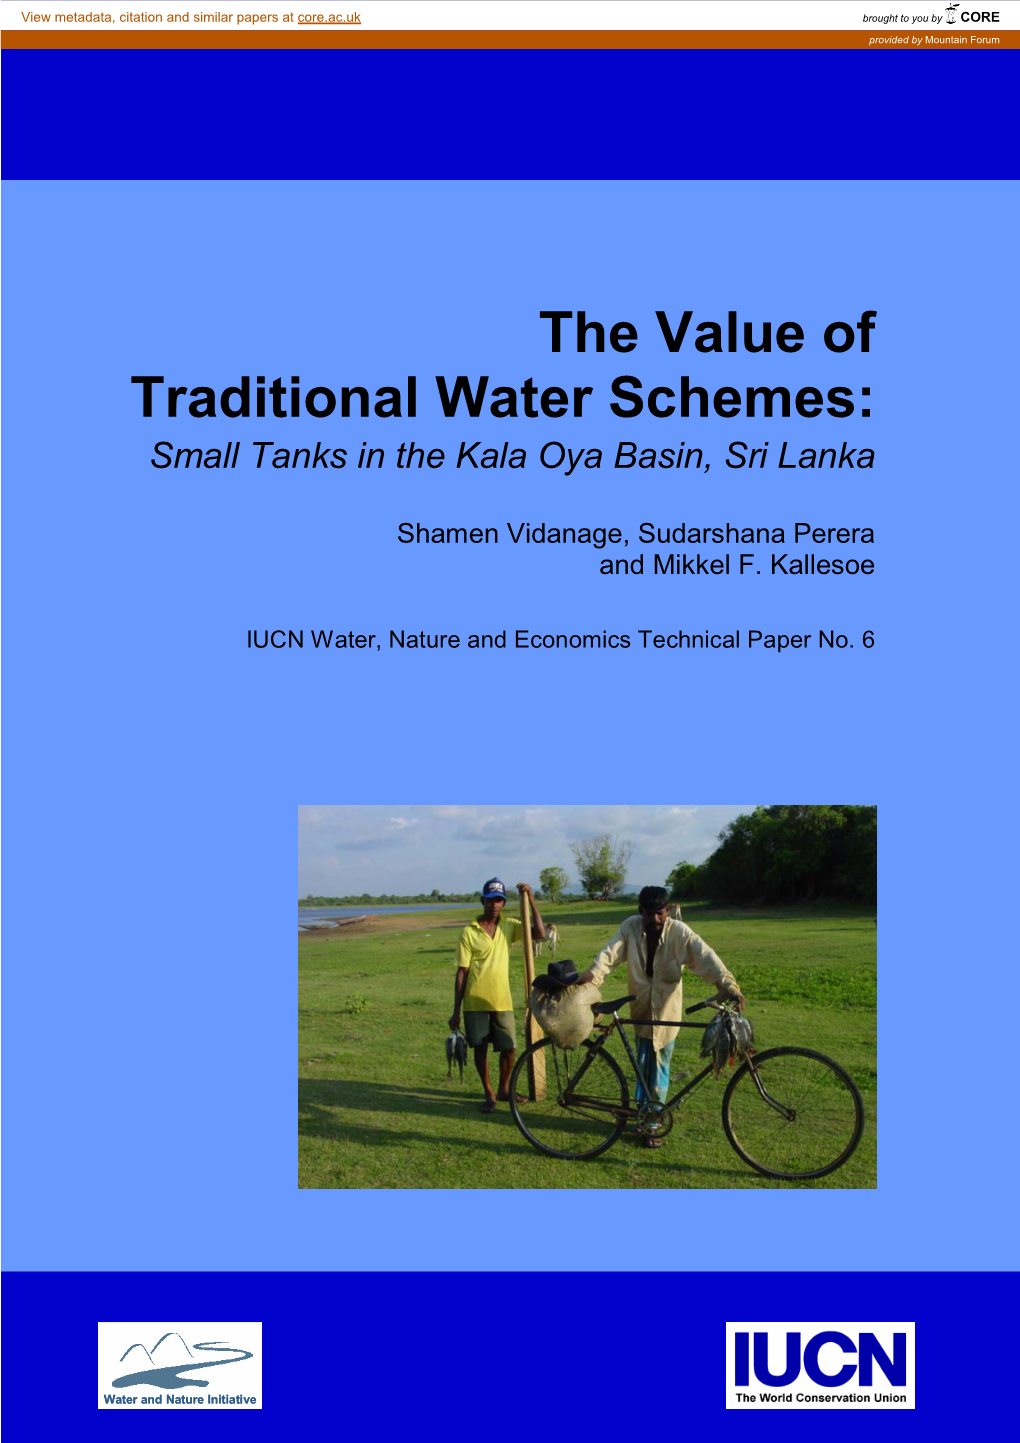 The Value of Traditional Water Schemes: Small Tanks in the Kala Oya Basin, Sri Lanka